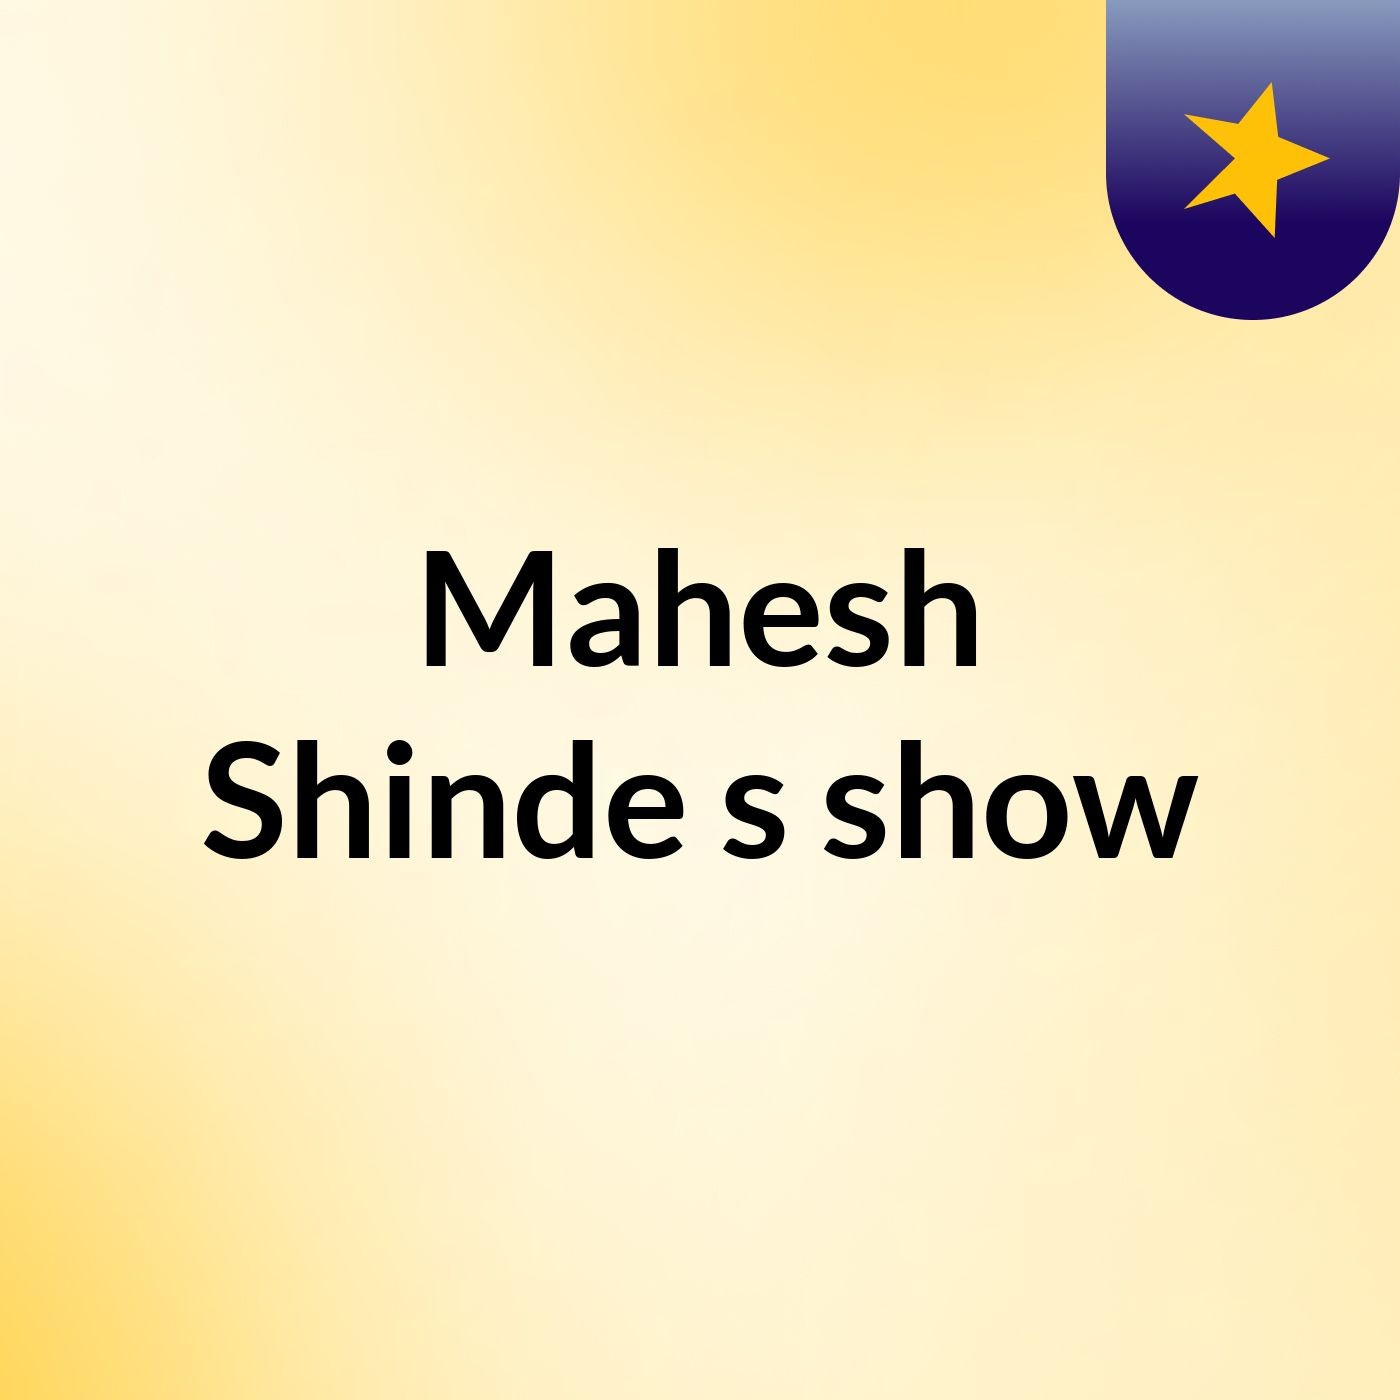 Mahesh Shinde's show